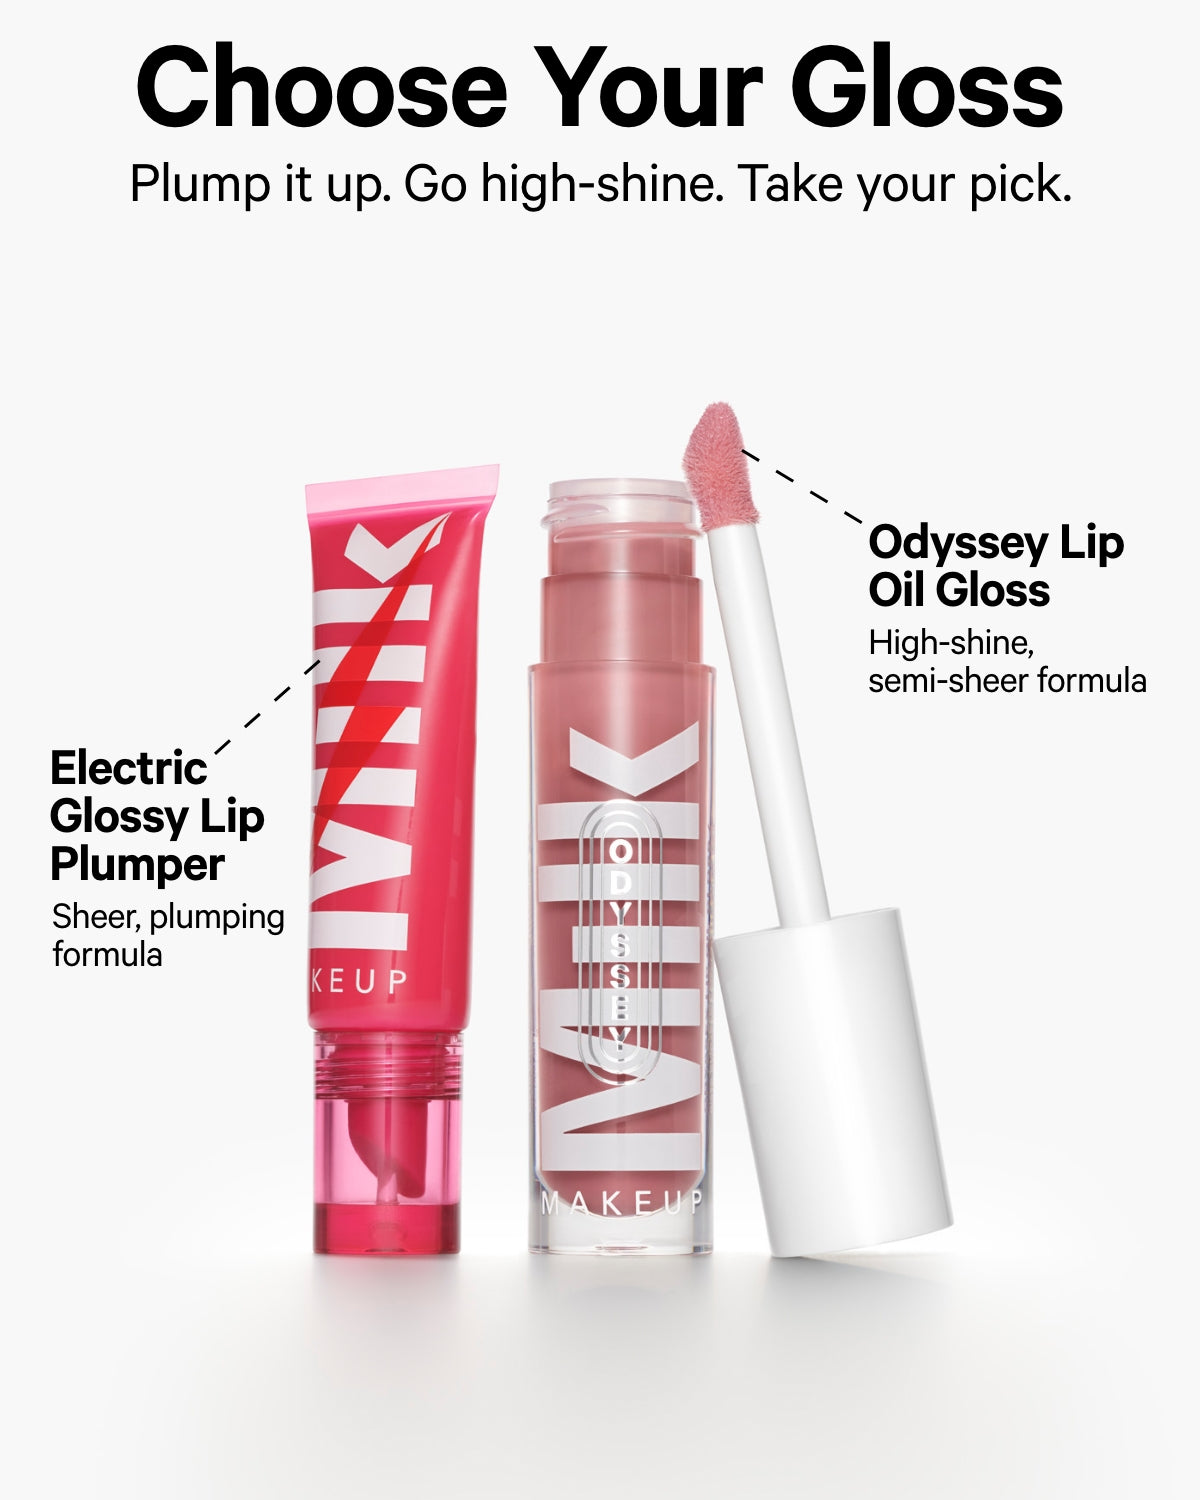 Odyssey Lip Oil Gloss vs Electric Glossy Lip Plumper | Milk Makeup